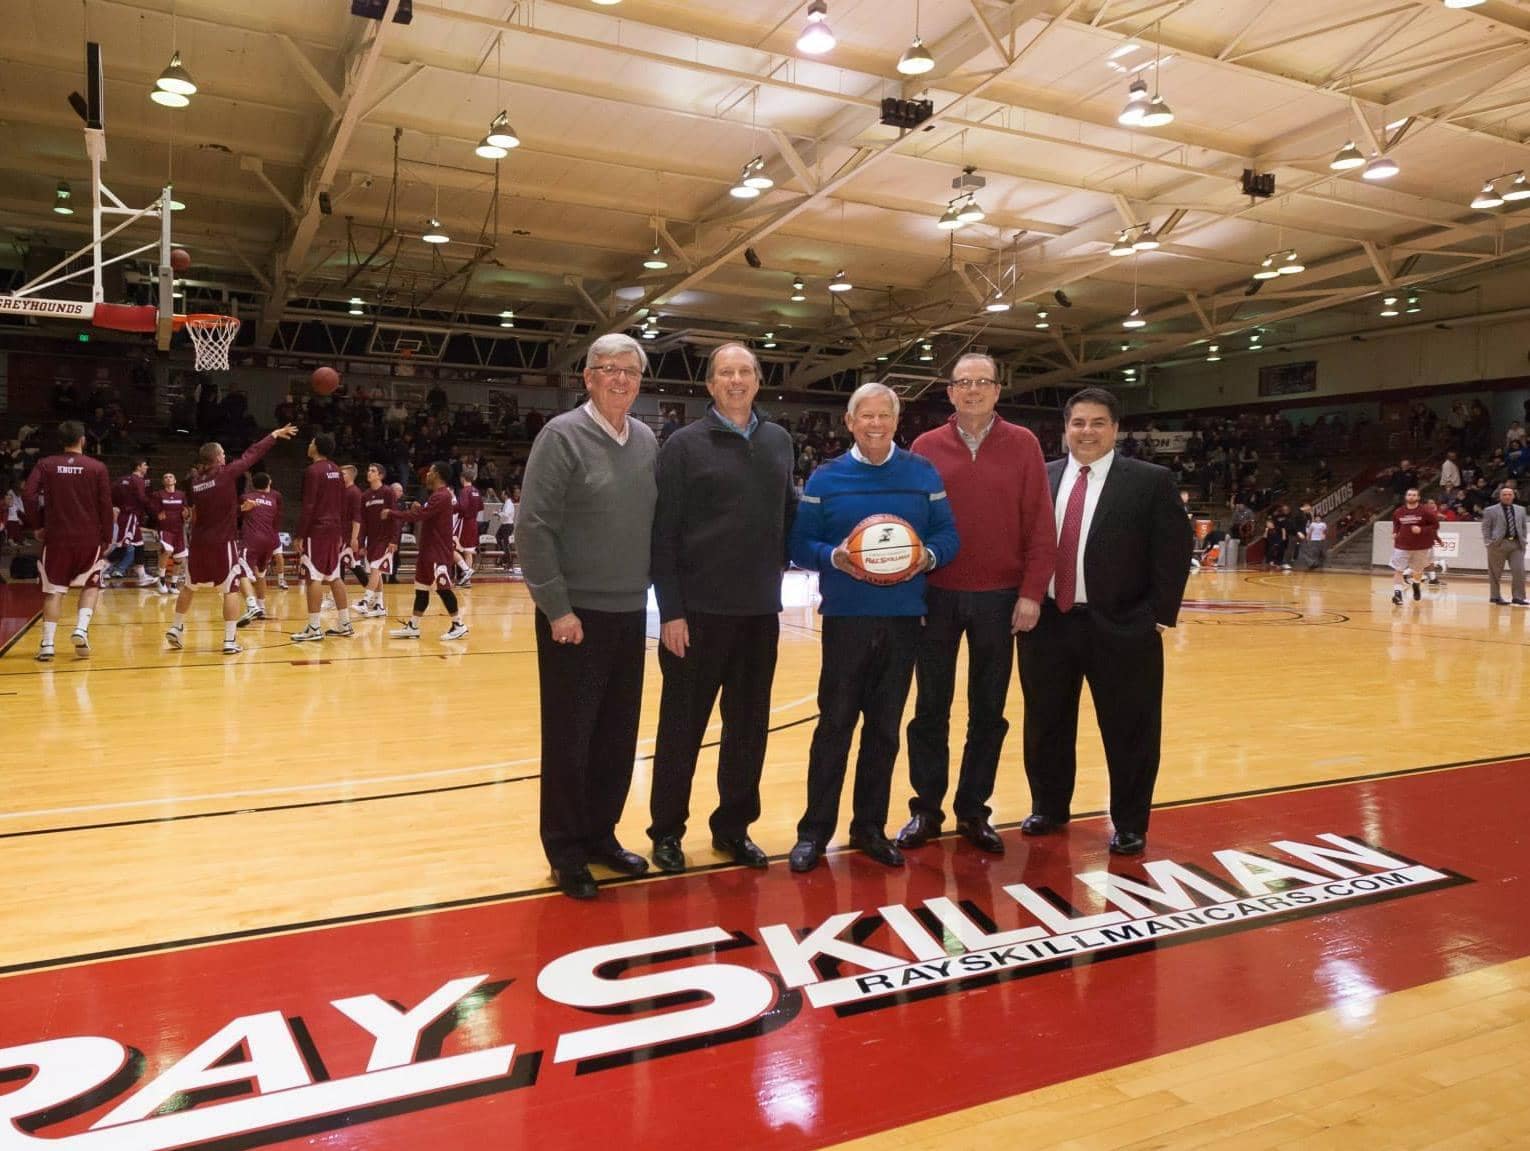 Ray Skillman on a basketball court